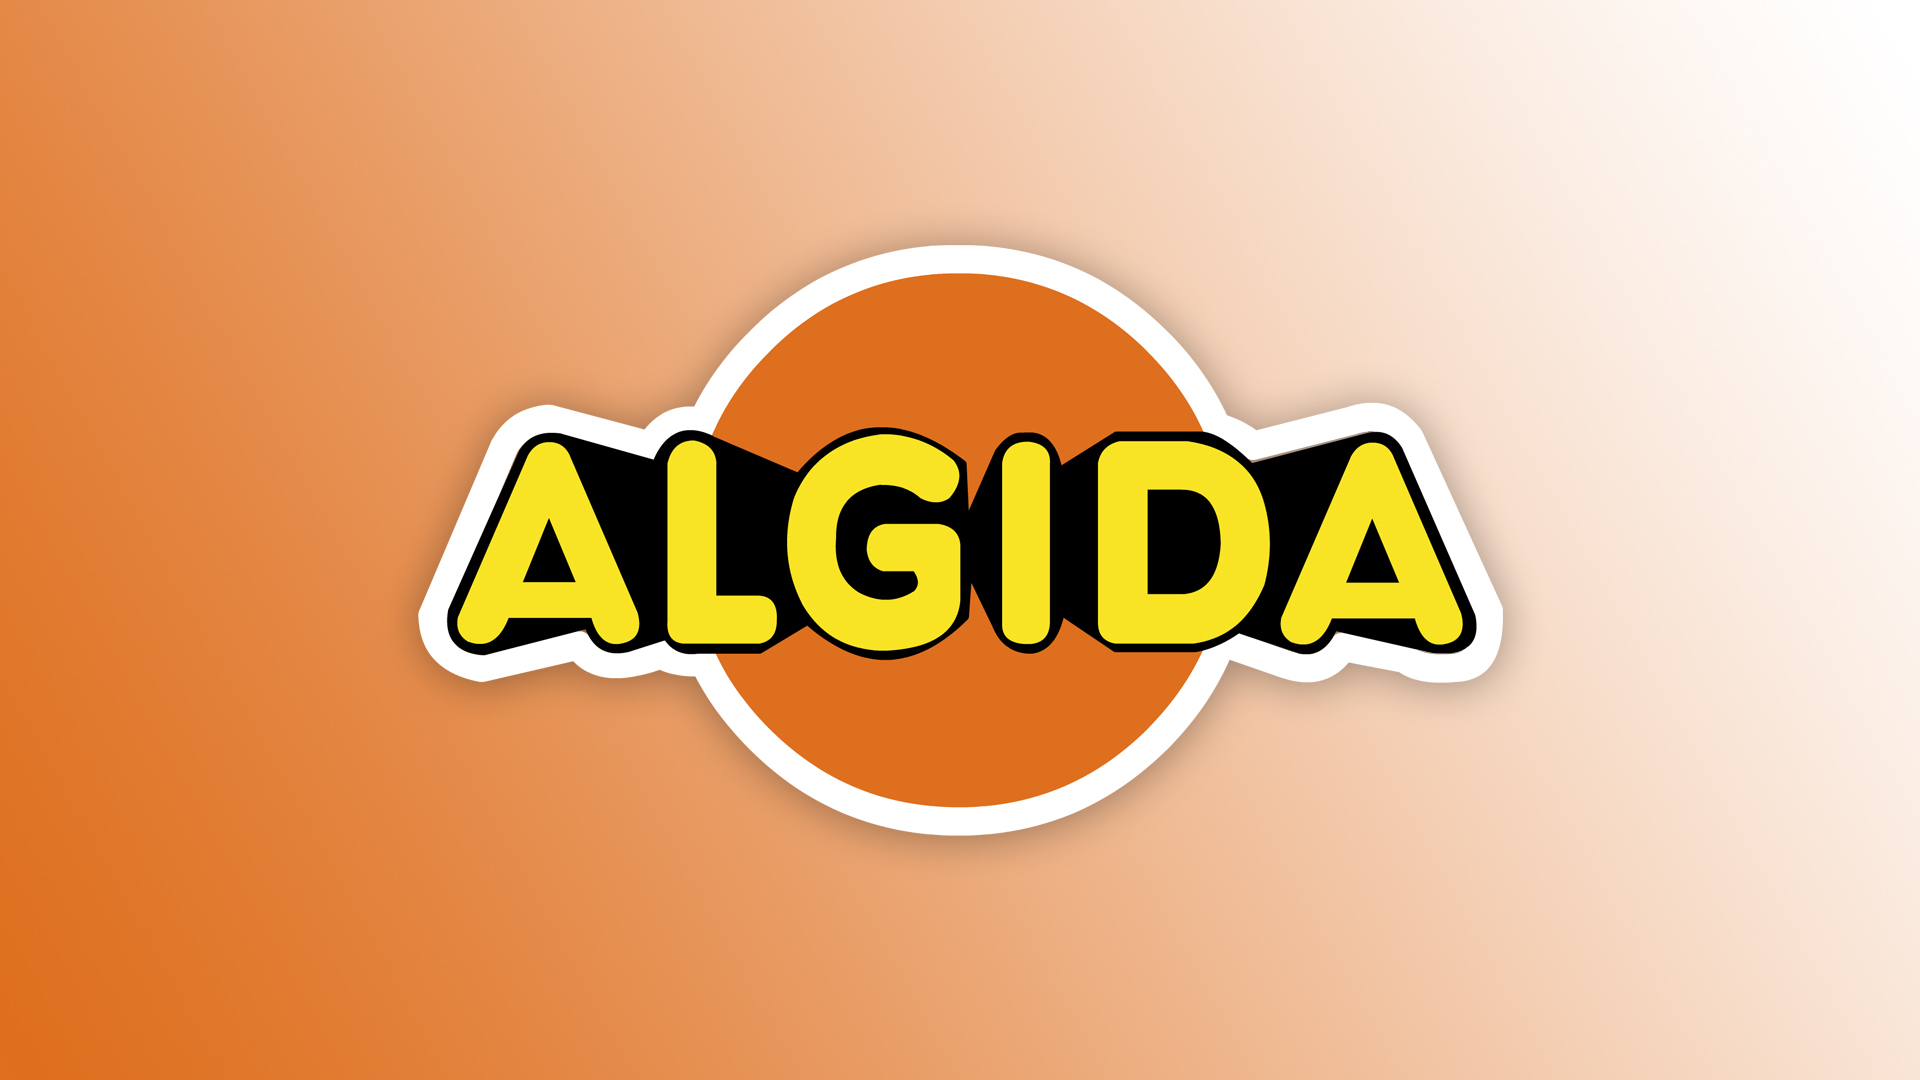 Algida Brand Logo 1920x1080